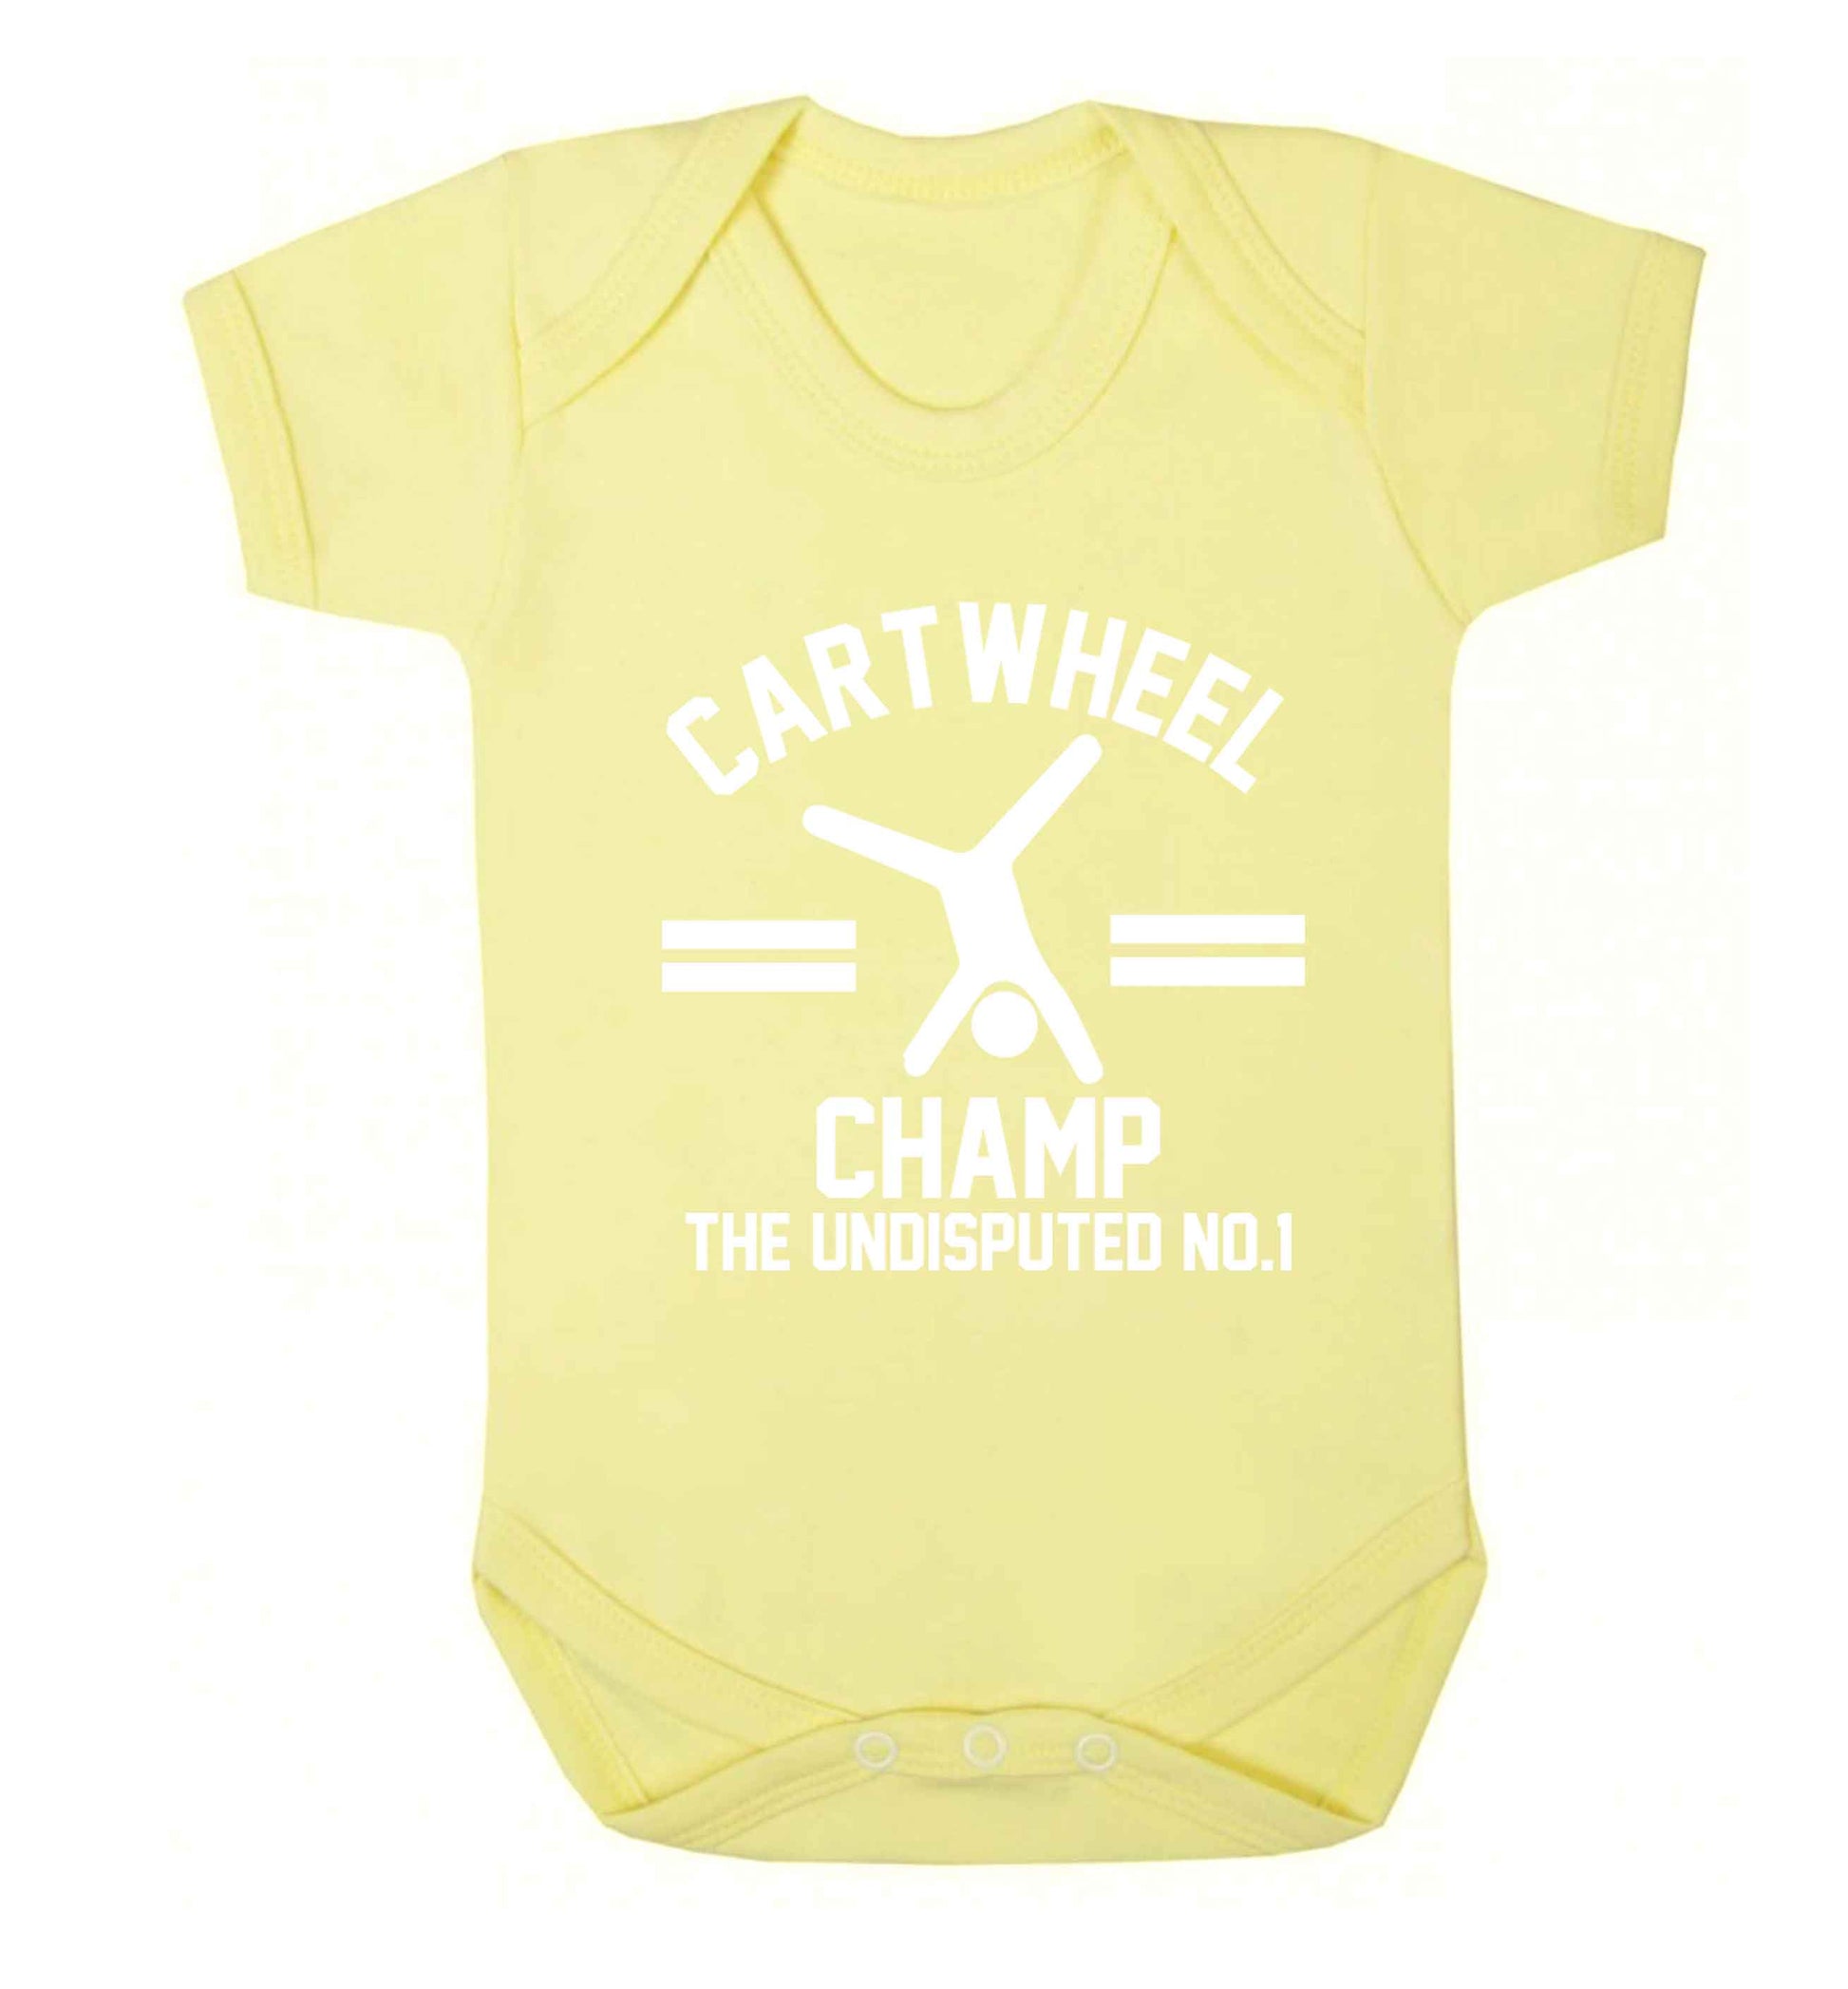 Undisputed cartwheel championship no.1  Baby Vest pale yellow 18-24 months